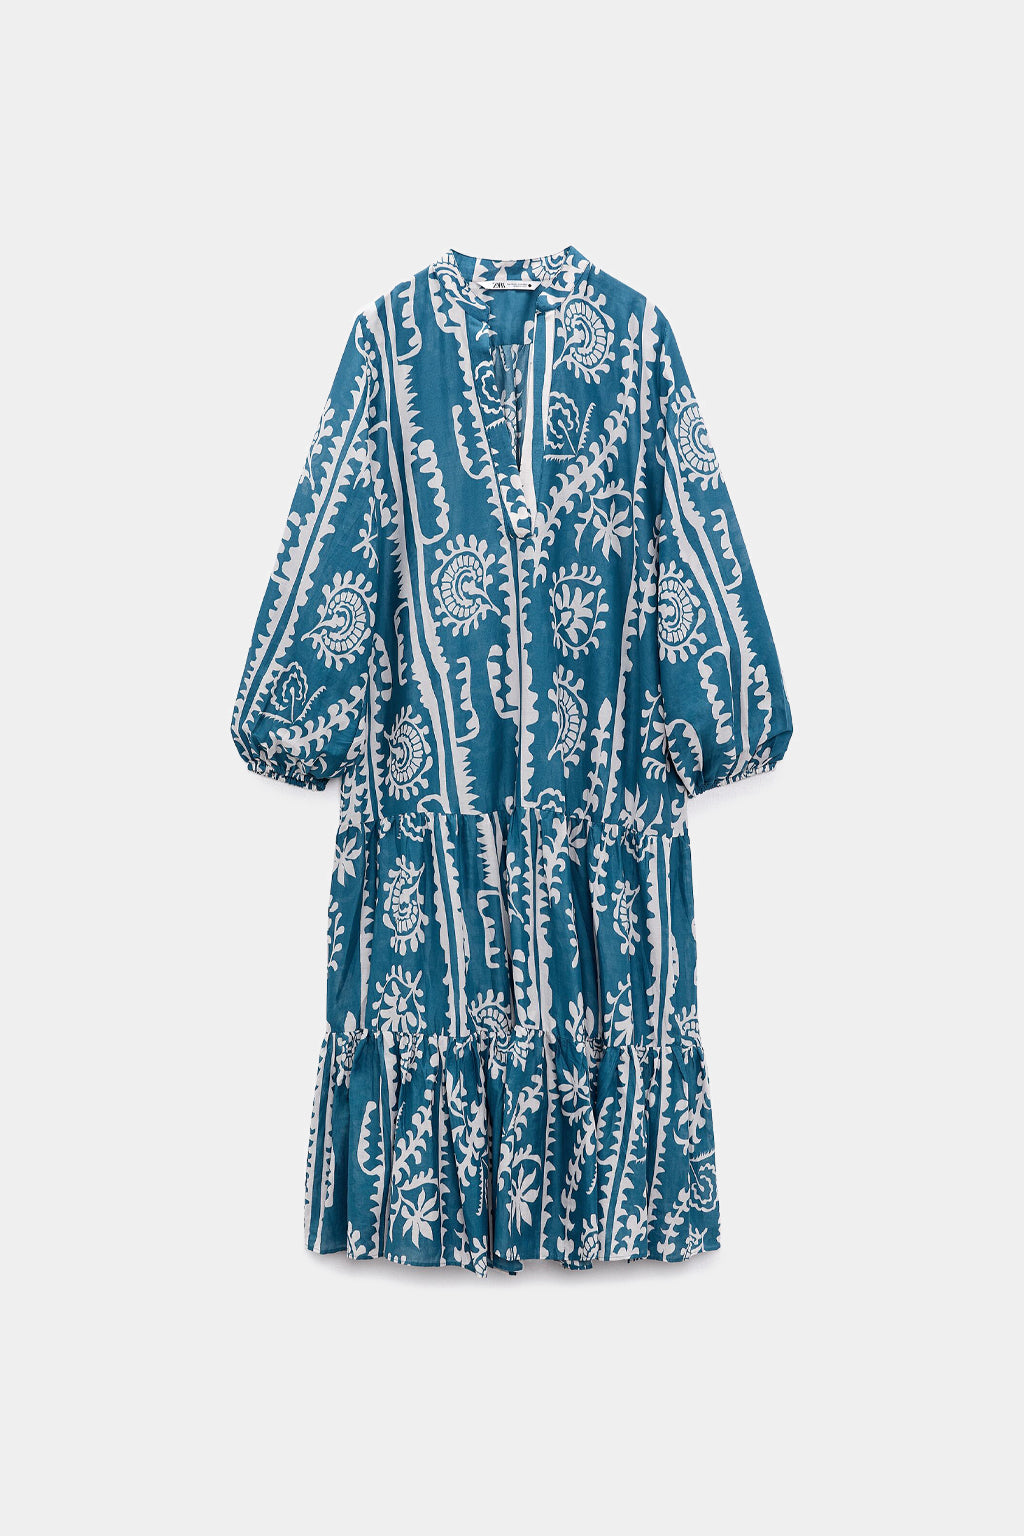 Zara - Printed Panel Dress